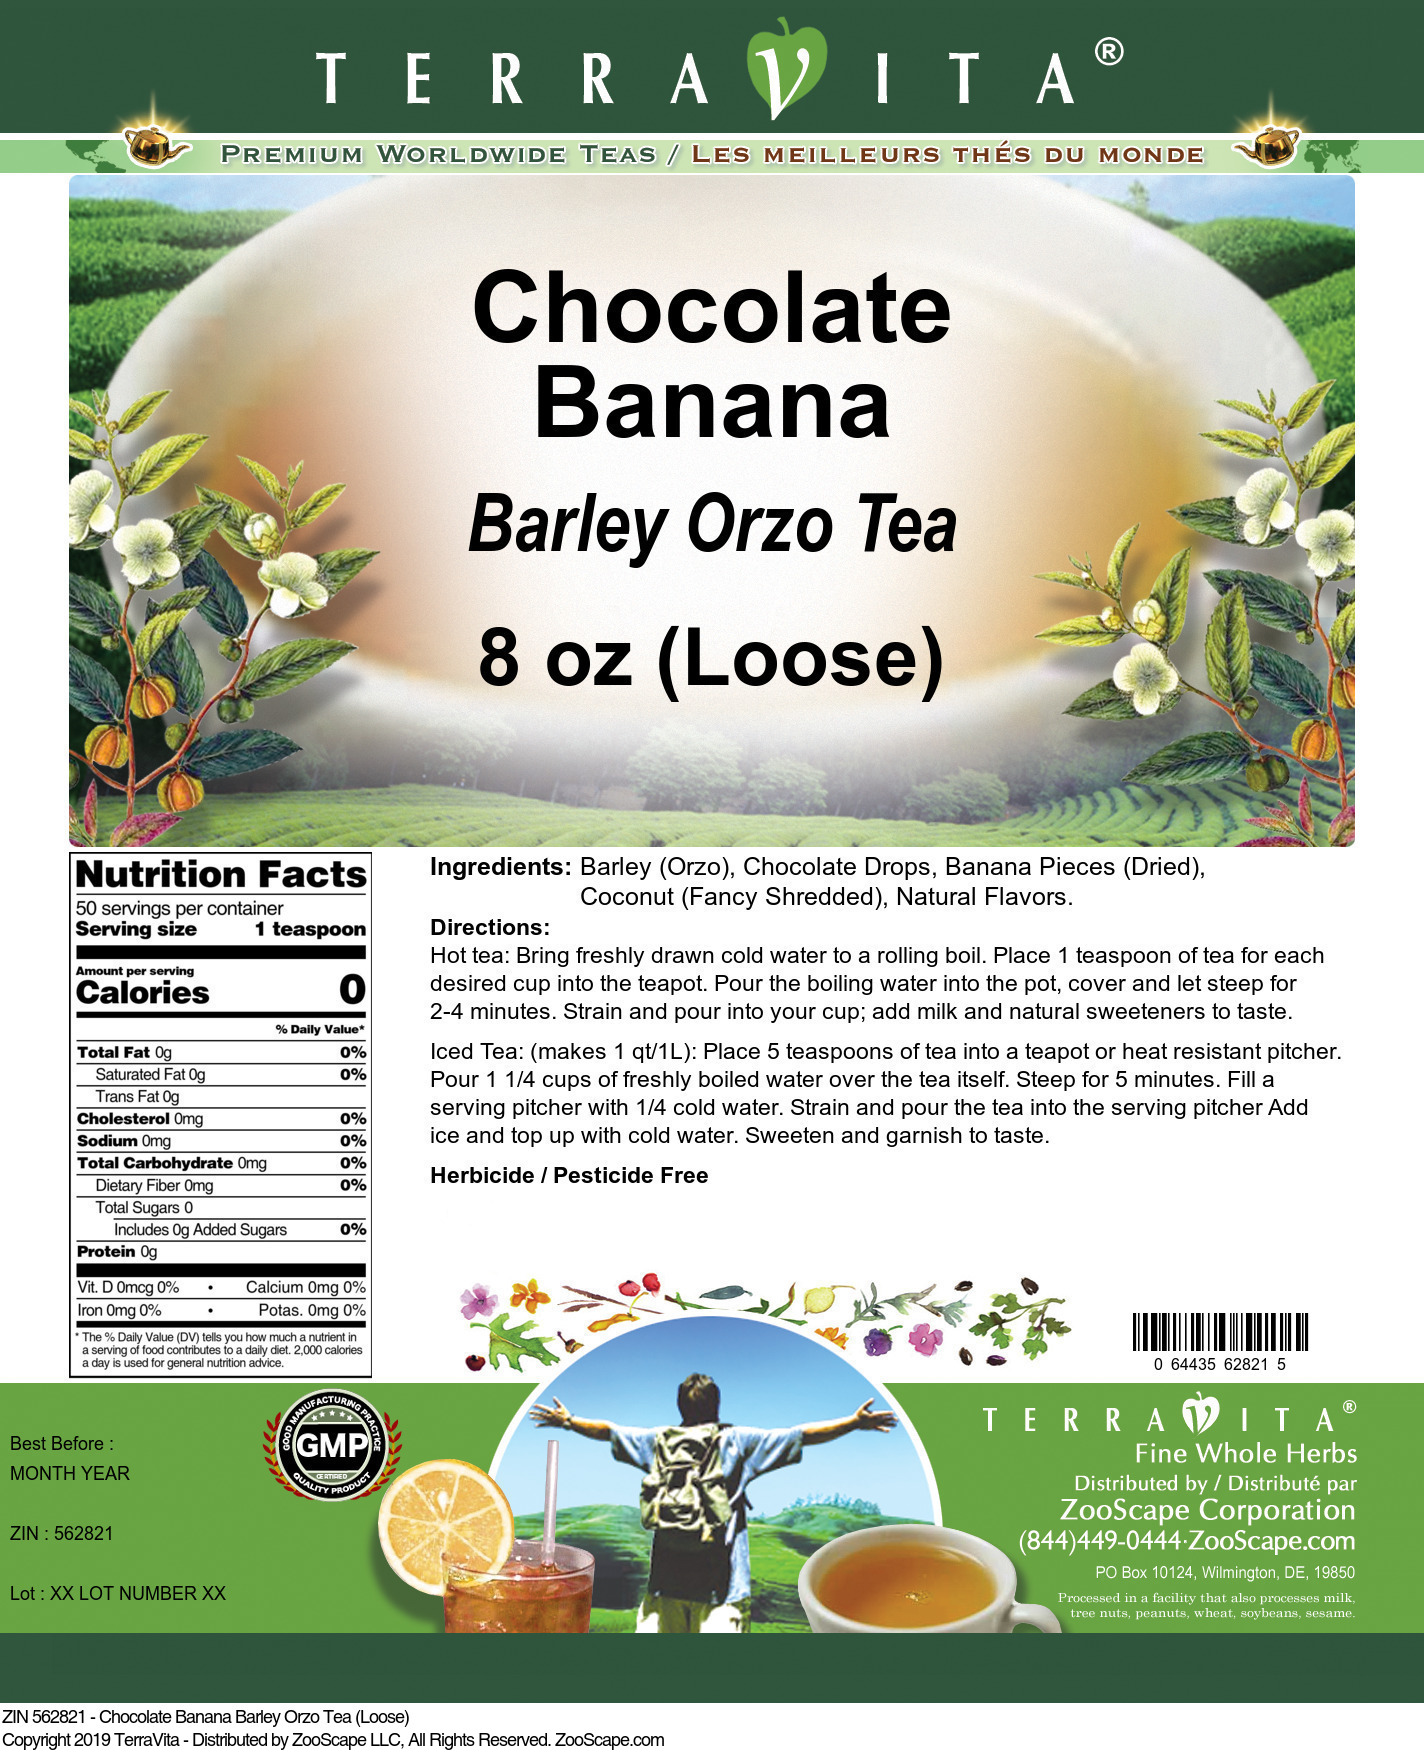 Chocolate Banana Barley Orzo Tea (Loose) - Label